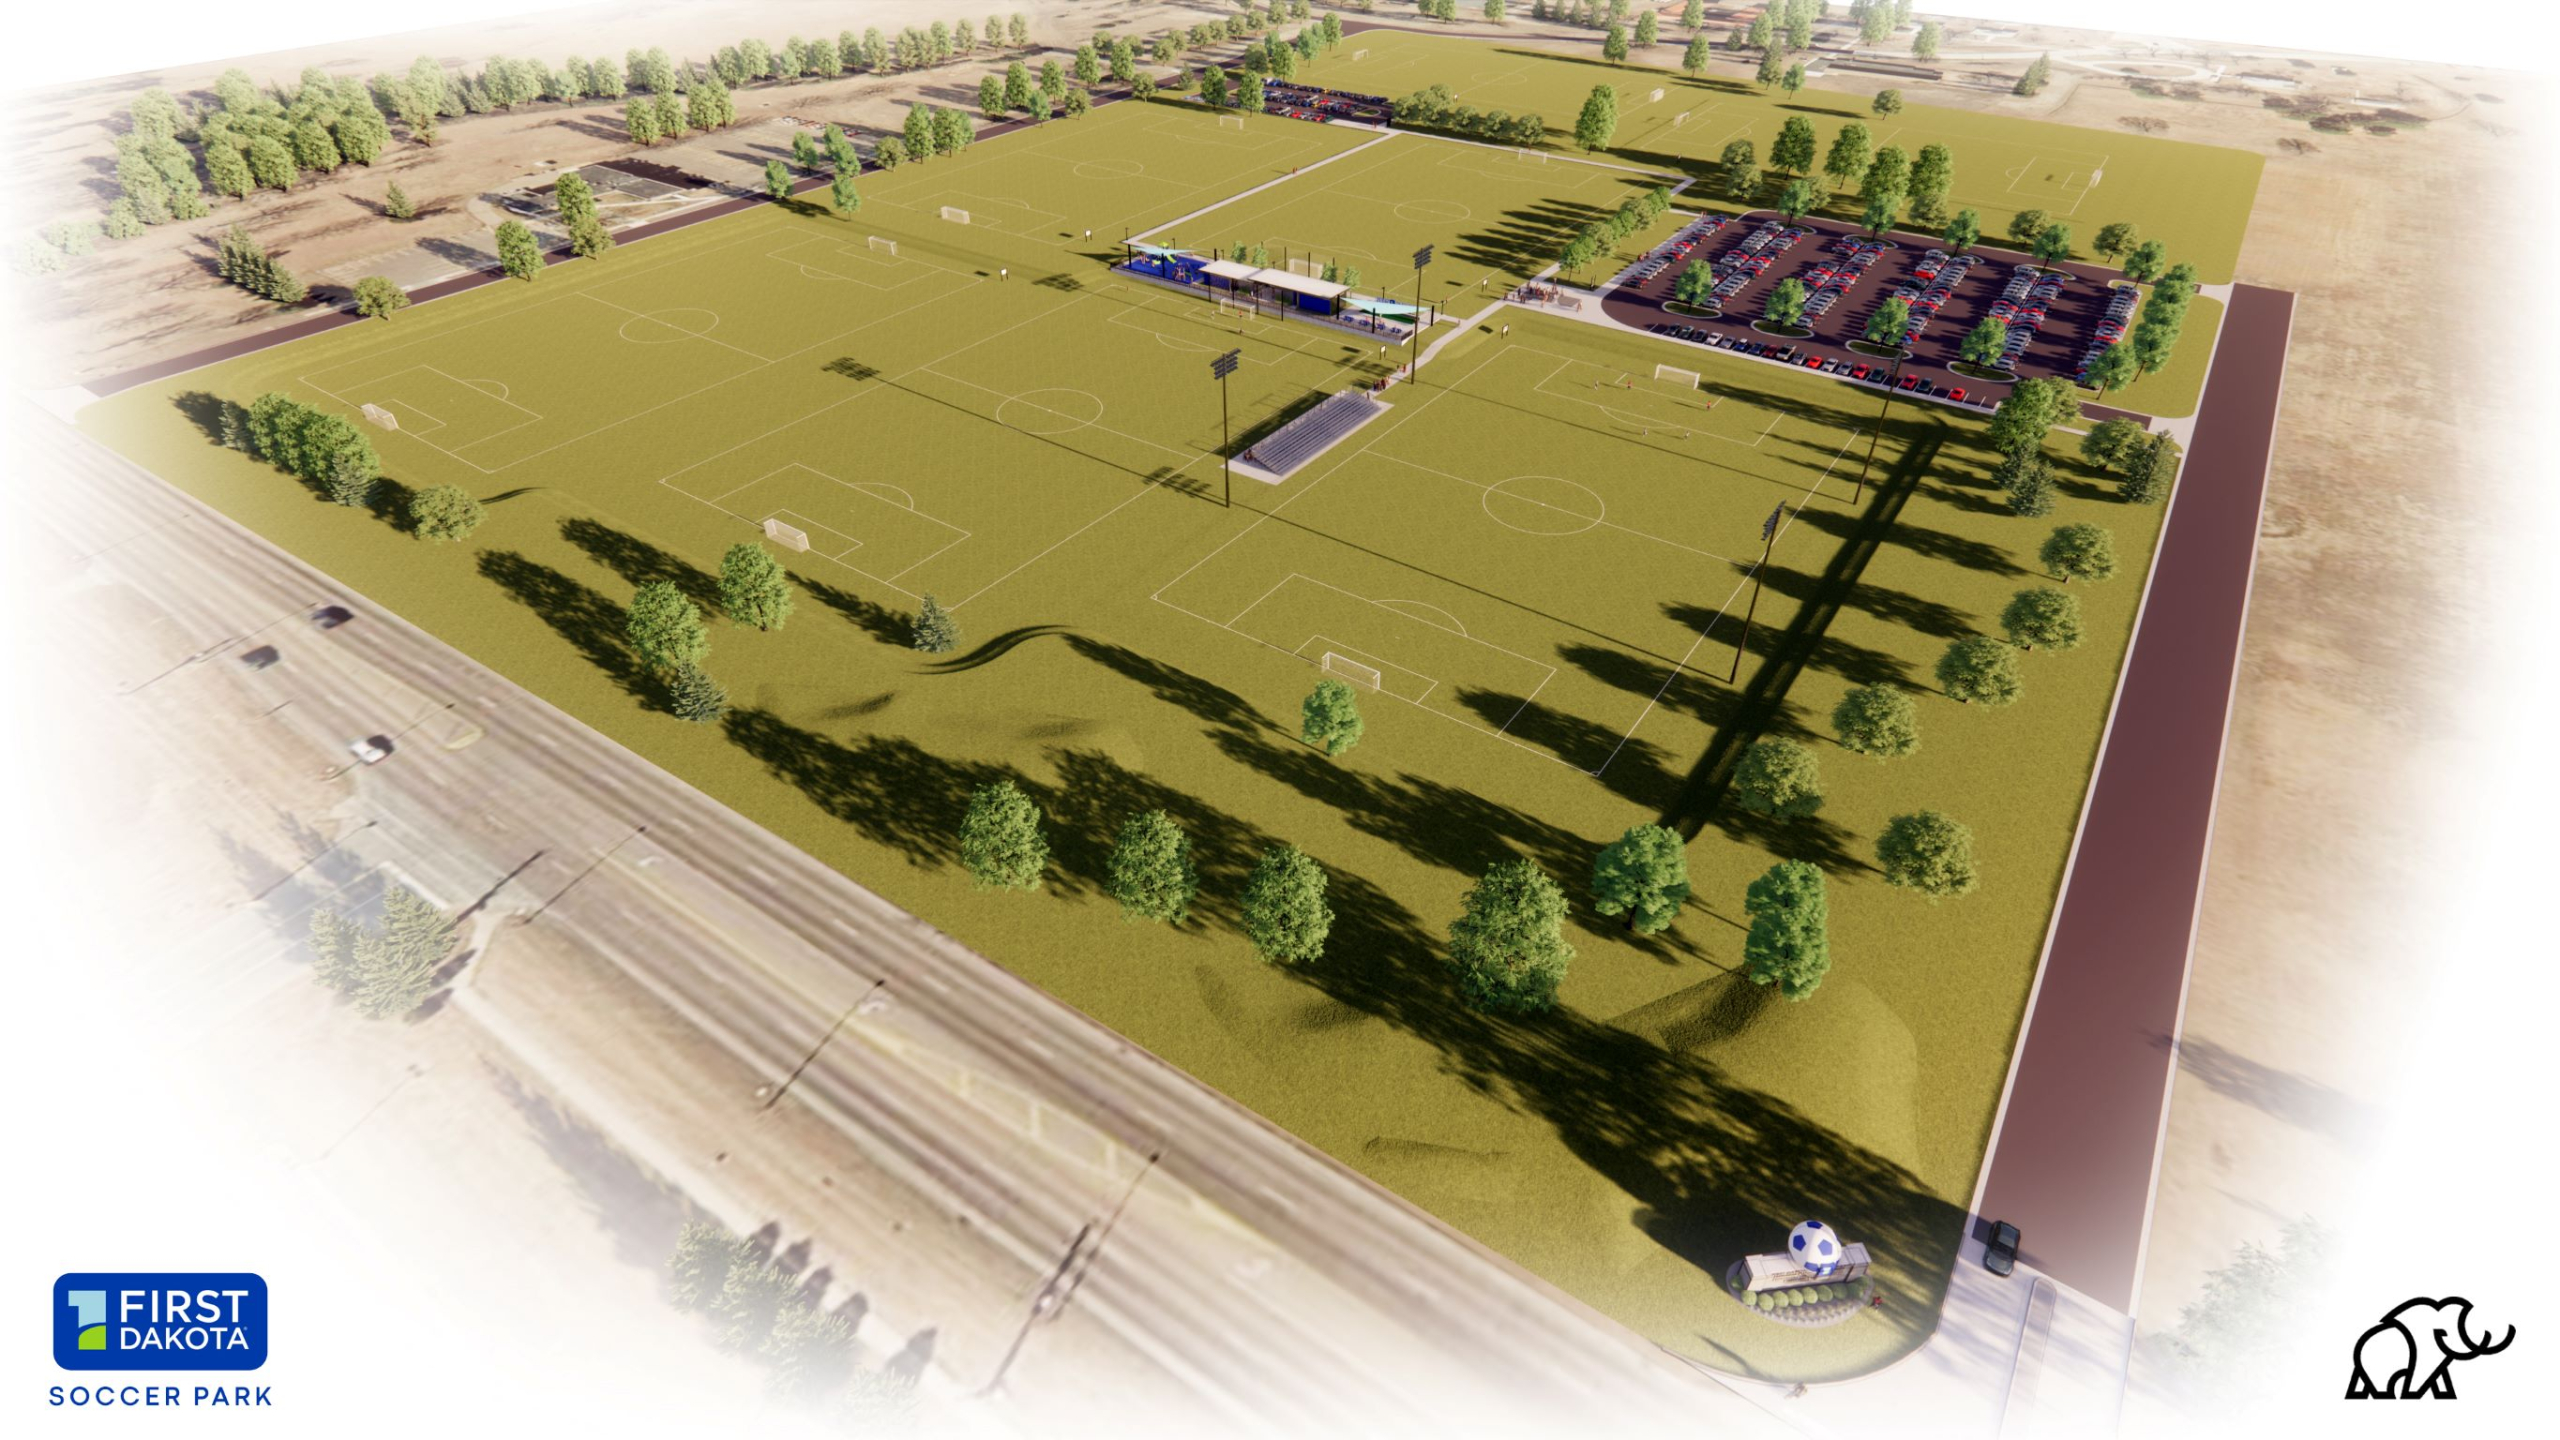 Hydro Pledges $150,000 to First Dakota Soccer Park